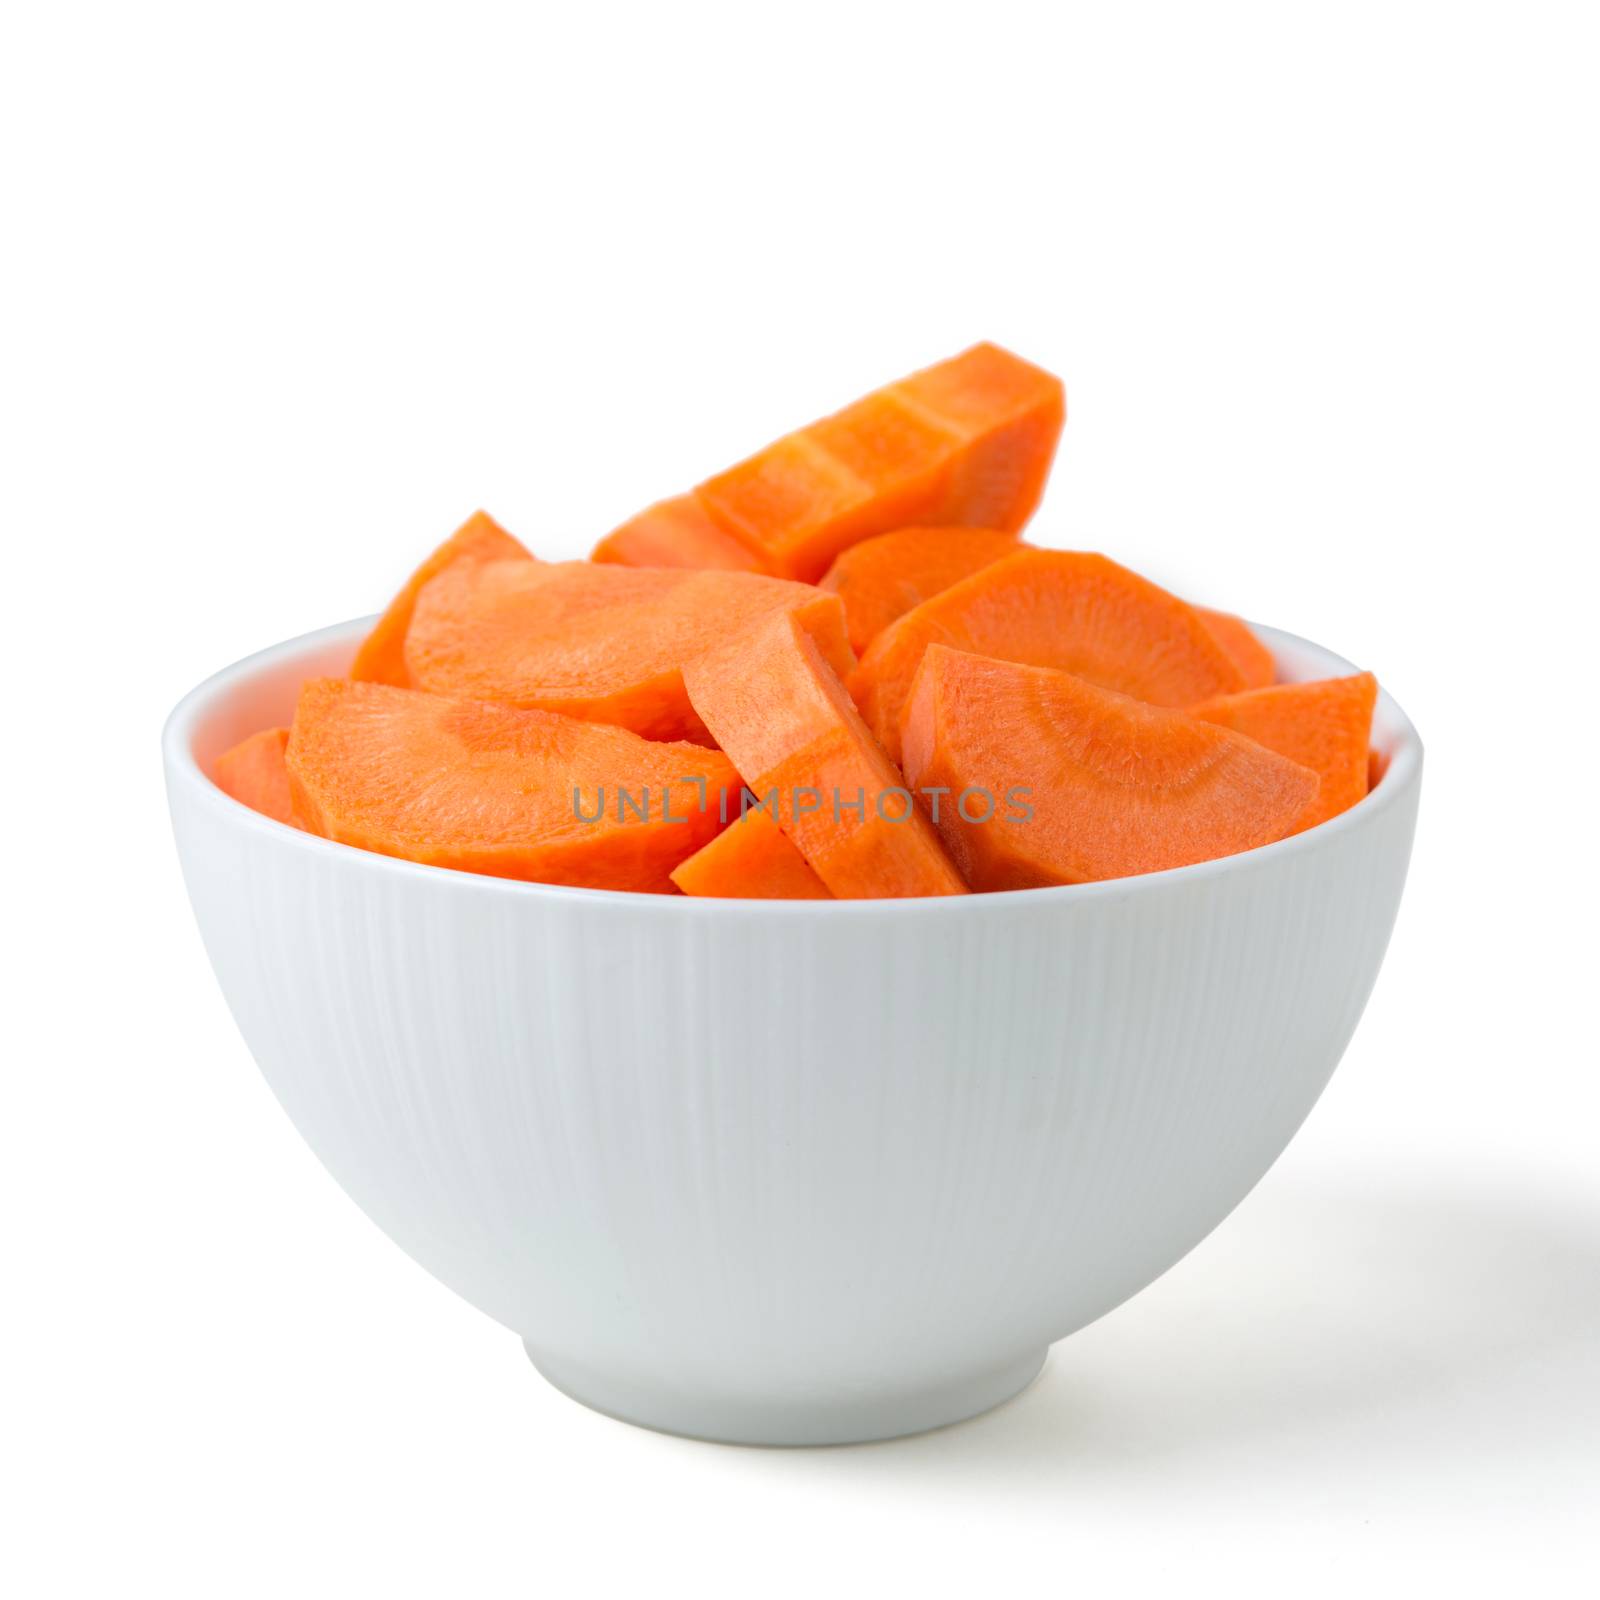 sliced carrots in bowl by antpkr